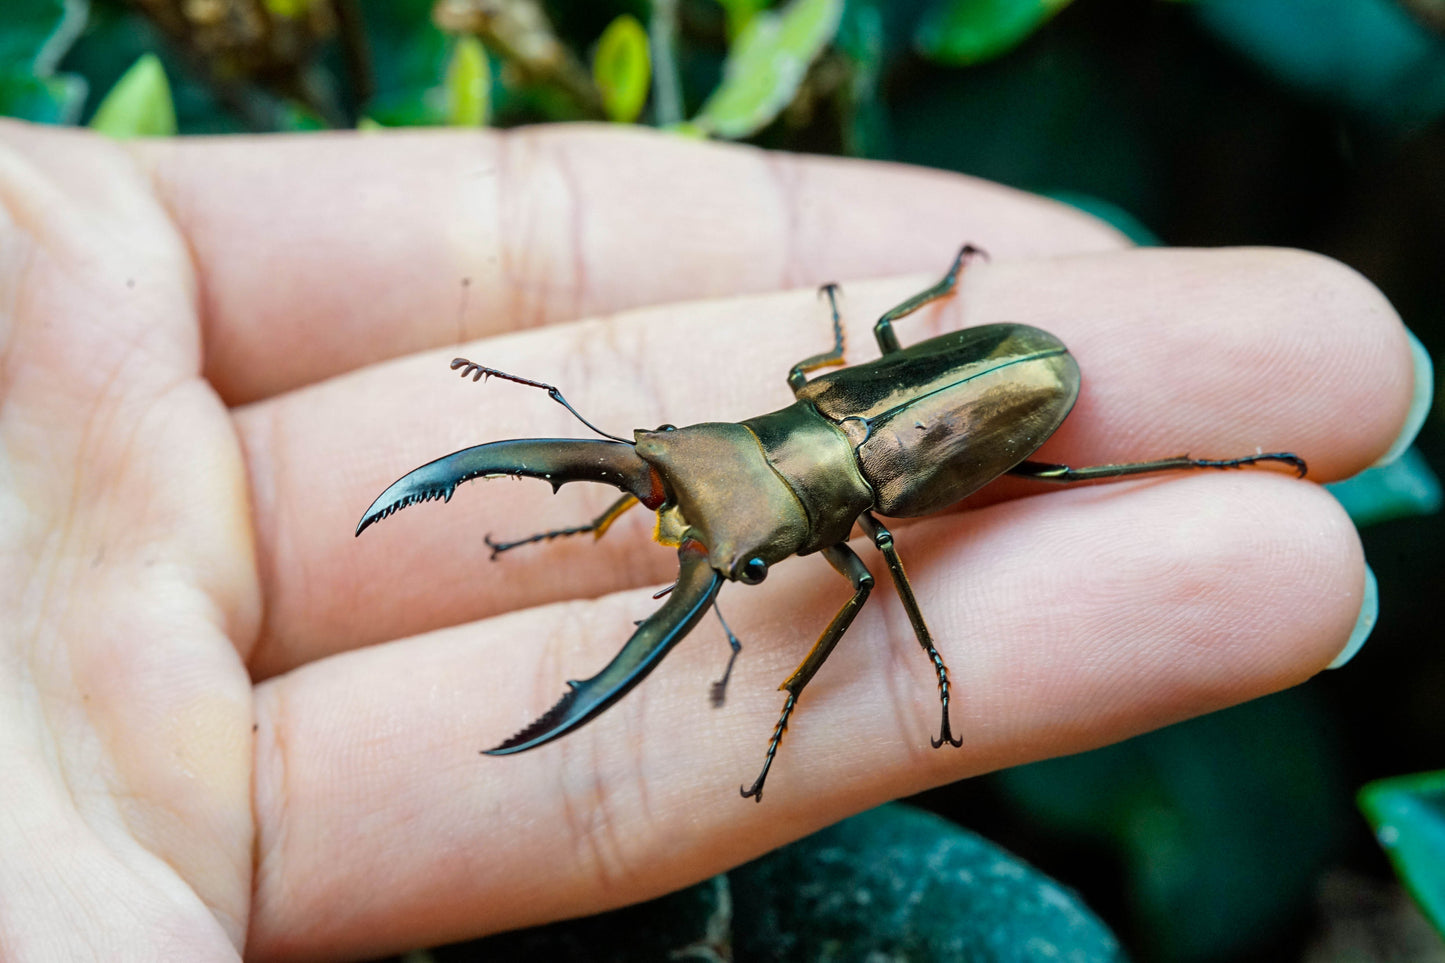 ADULTS: Metallic stag beetle  (Cyclommatus metallifer)